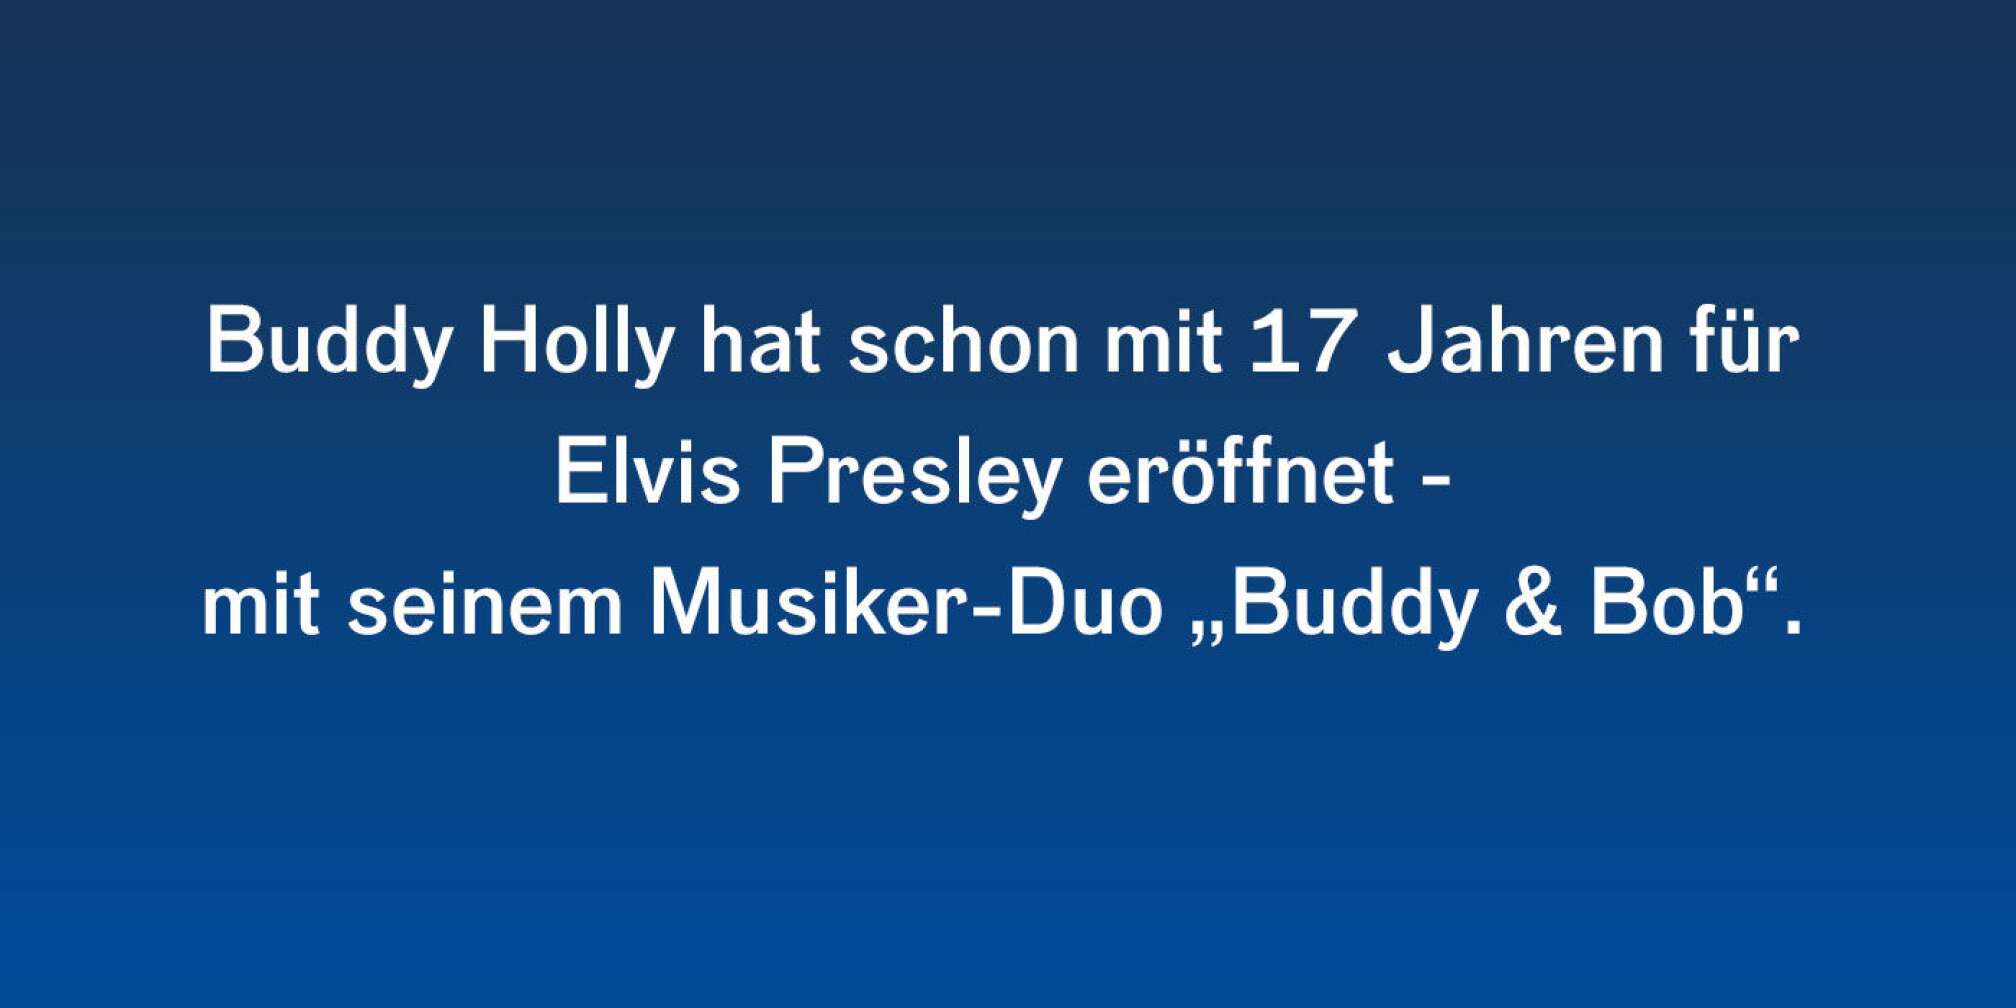 9 Fakten über Buddy Holly